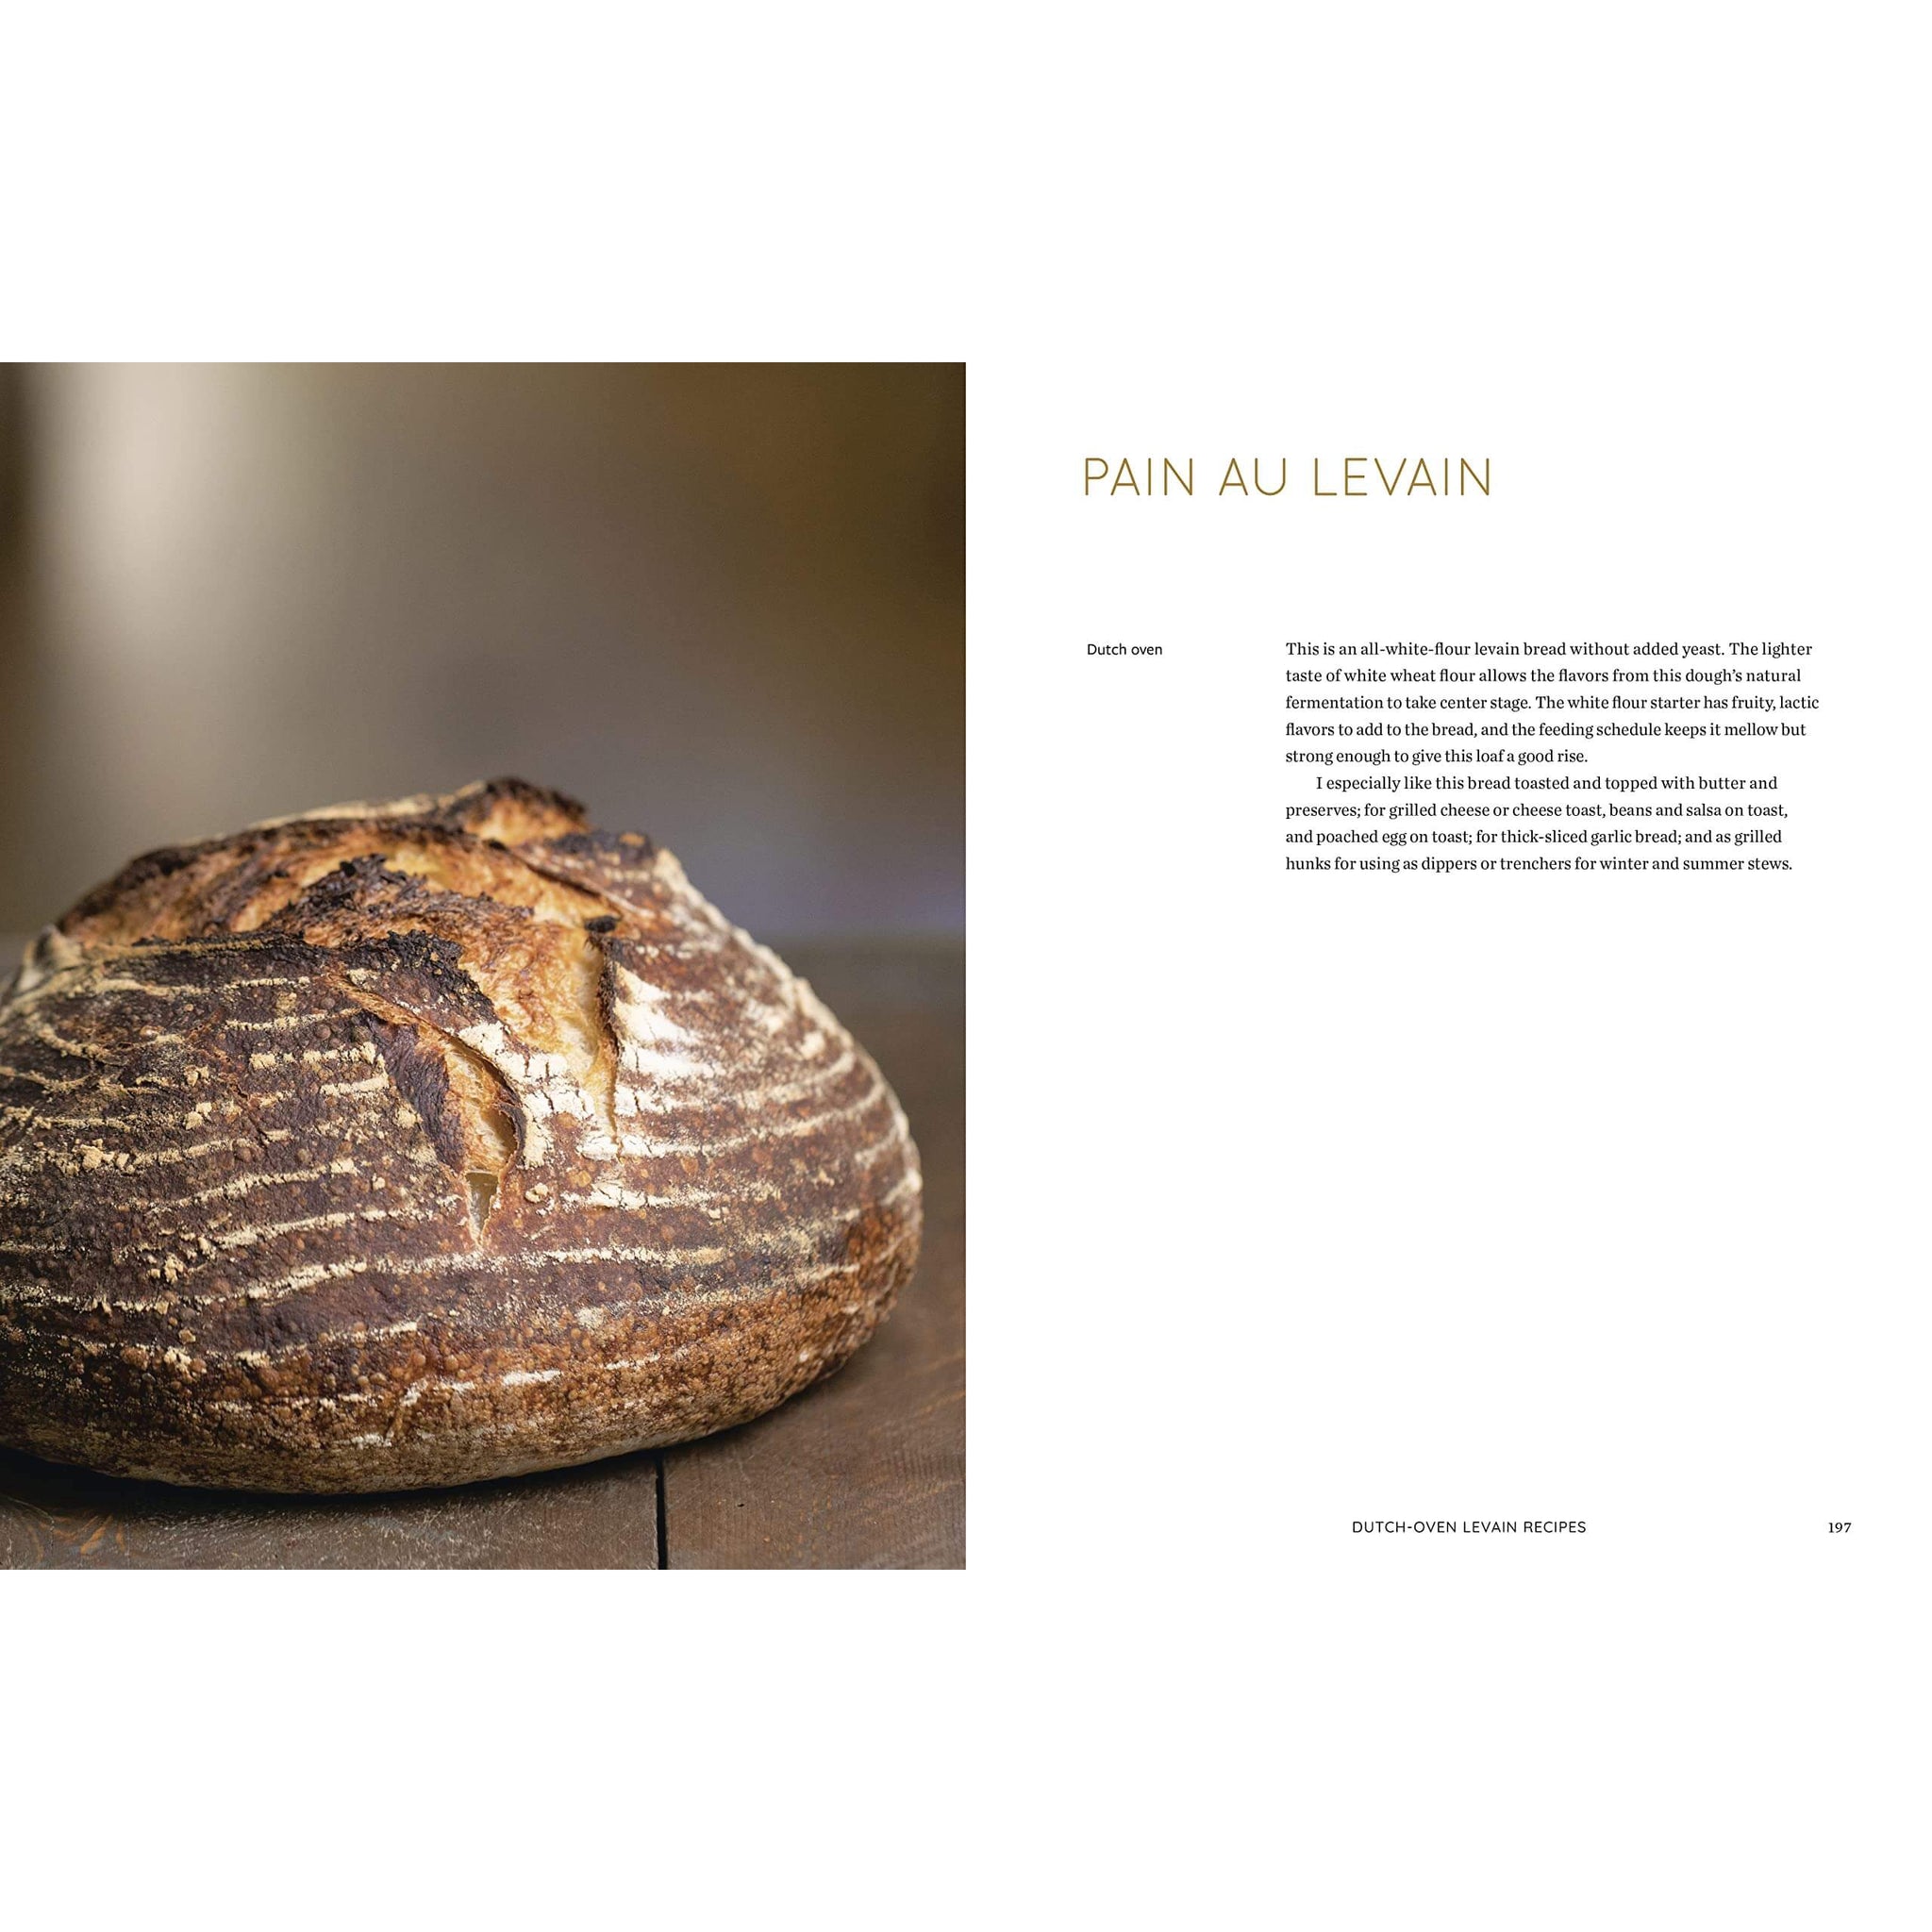 Ken Forkish: Evolutions in Bread